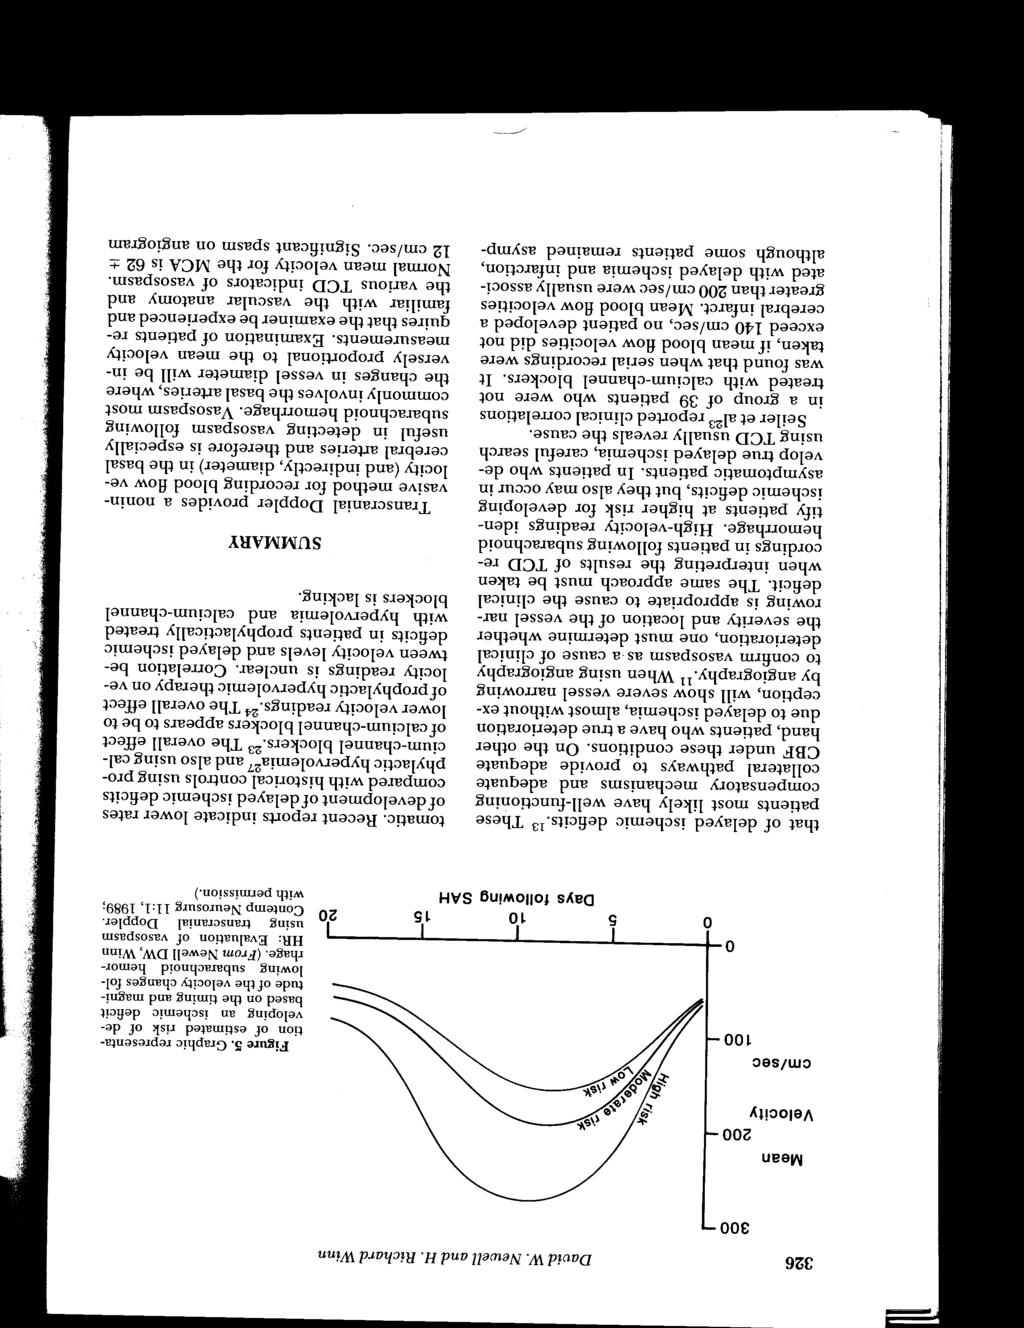 326 David W. Newell and H. Richard Winn 300 Mean 200 Velocity em/sec 100 01r----~------r-----.-----~ 0 5 10 15 Days following SAH Figure 5.